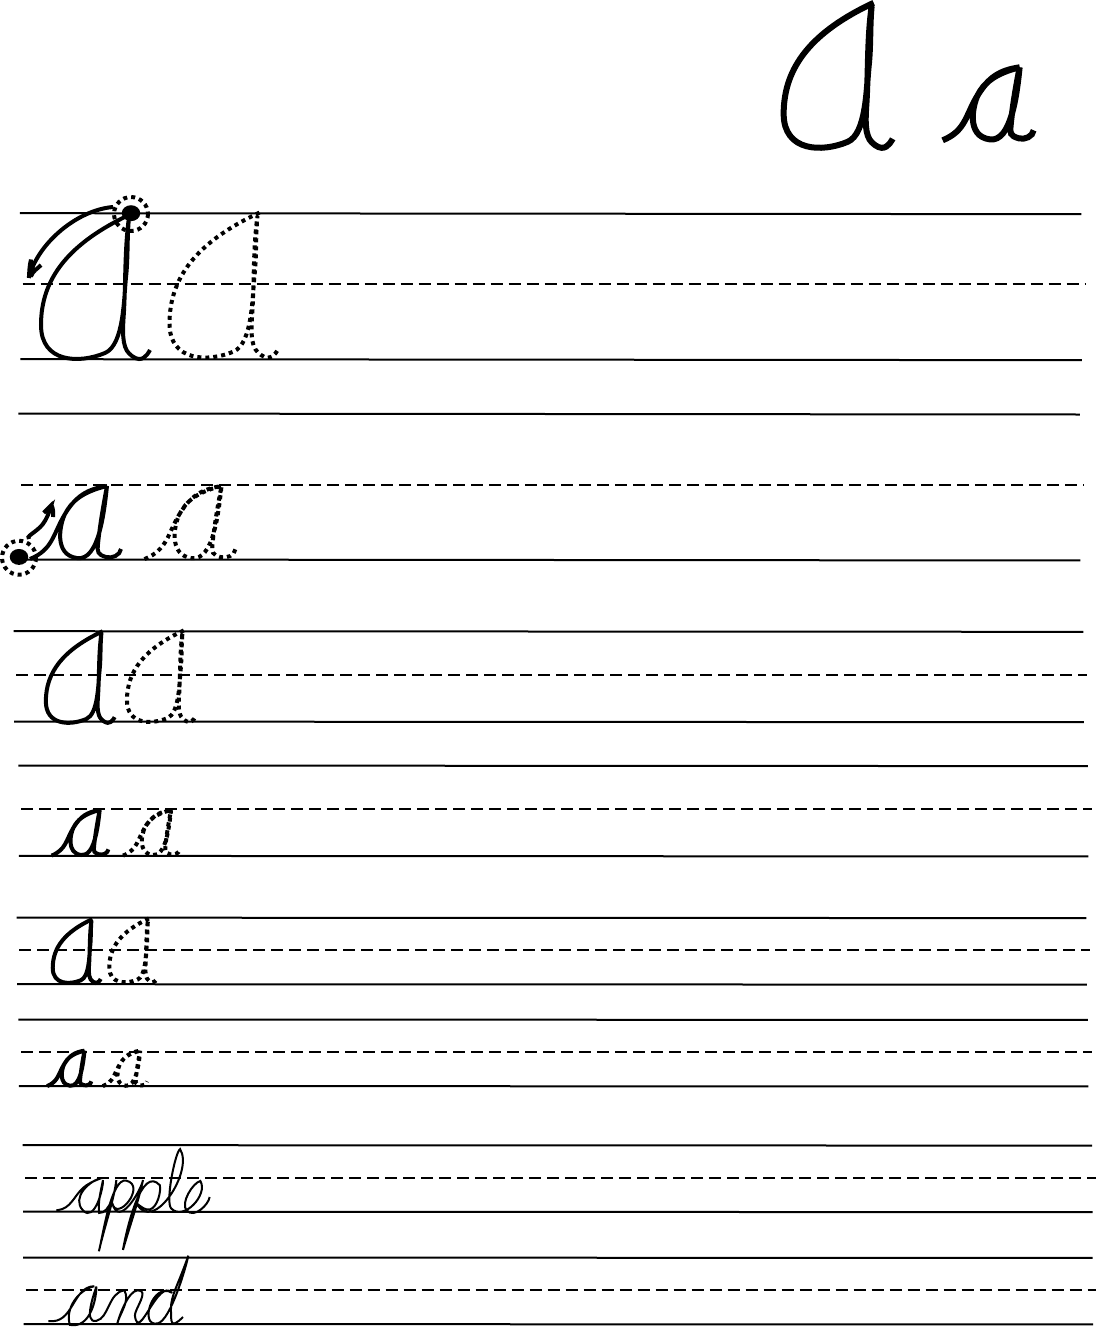 Free Cursive Letters Chart - PDF | 3199KB | 26 Page(s)